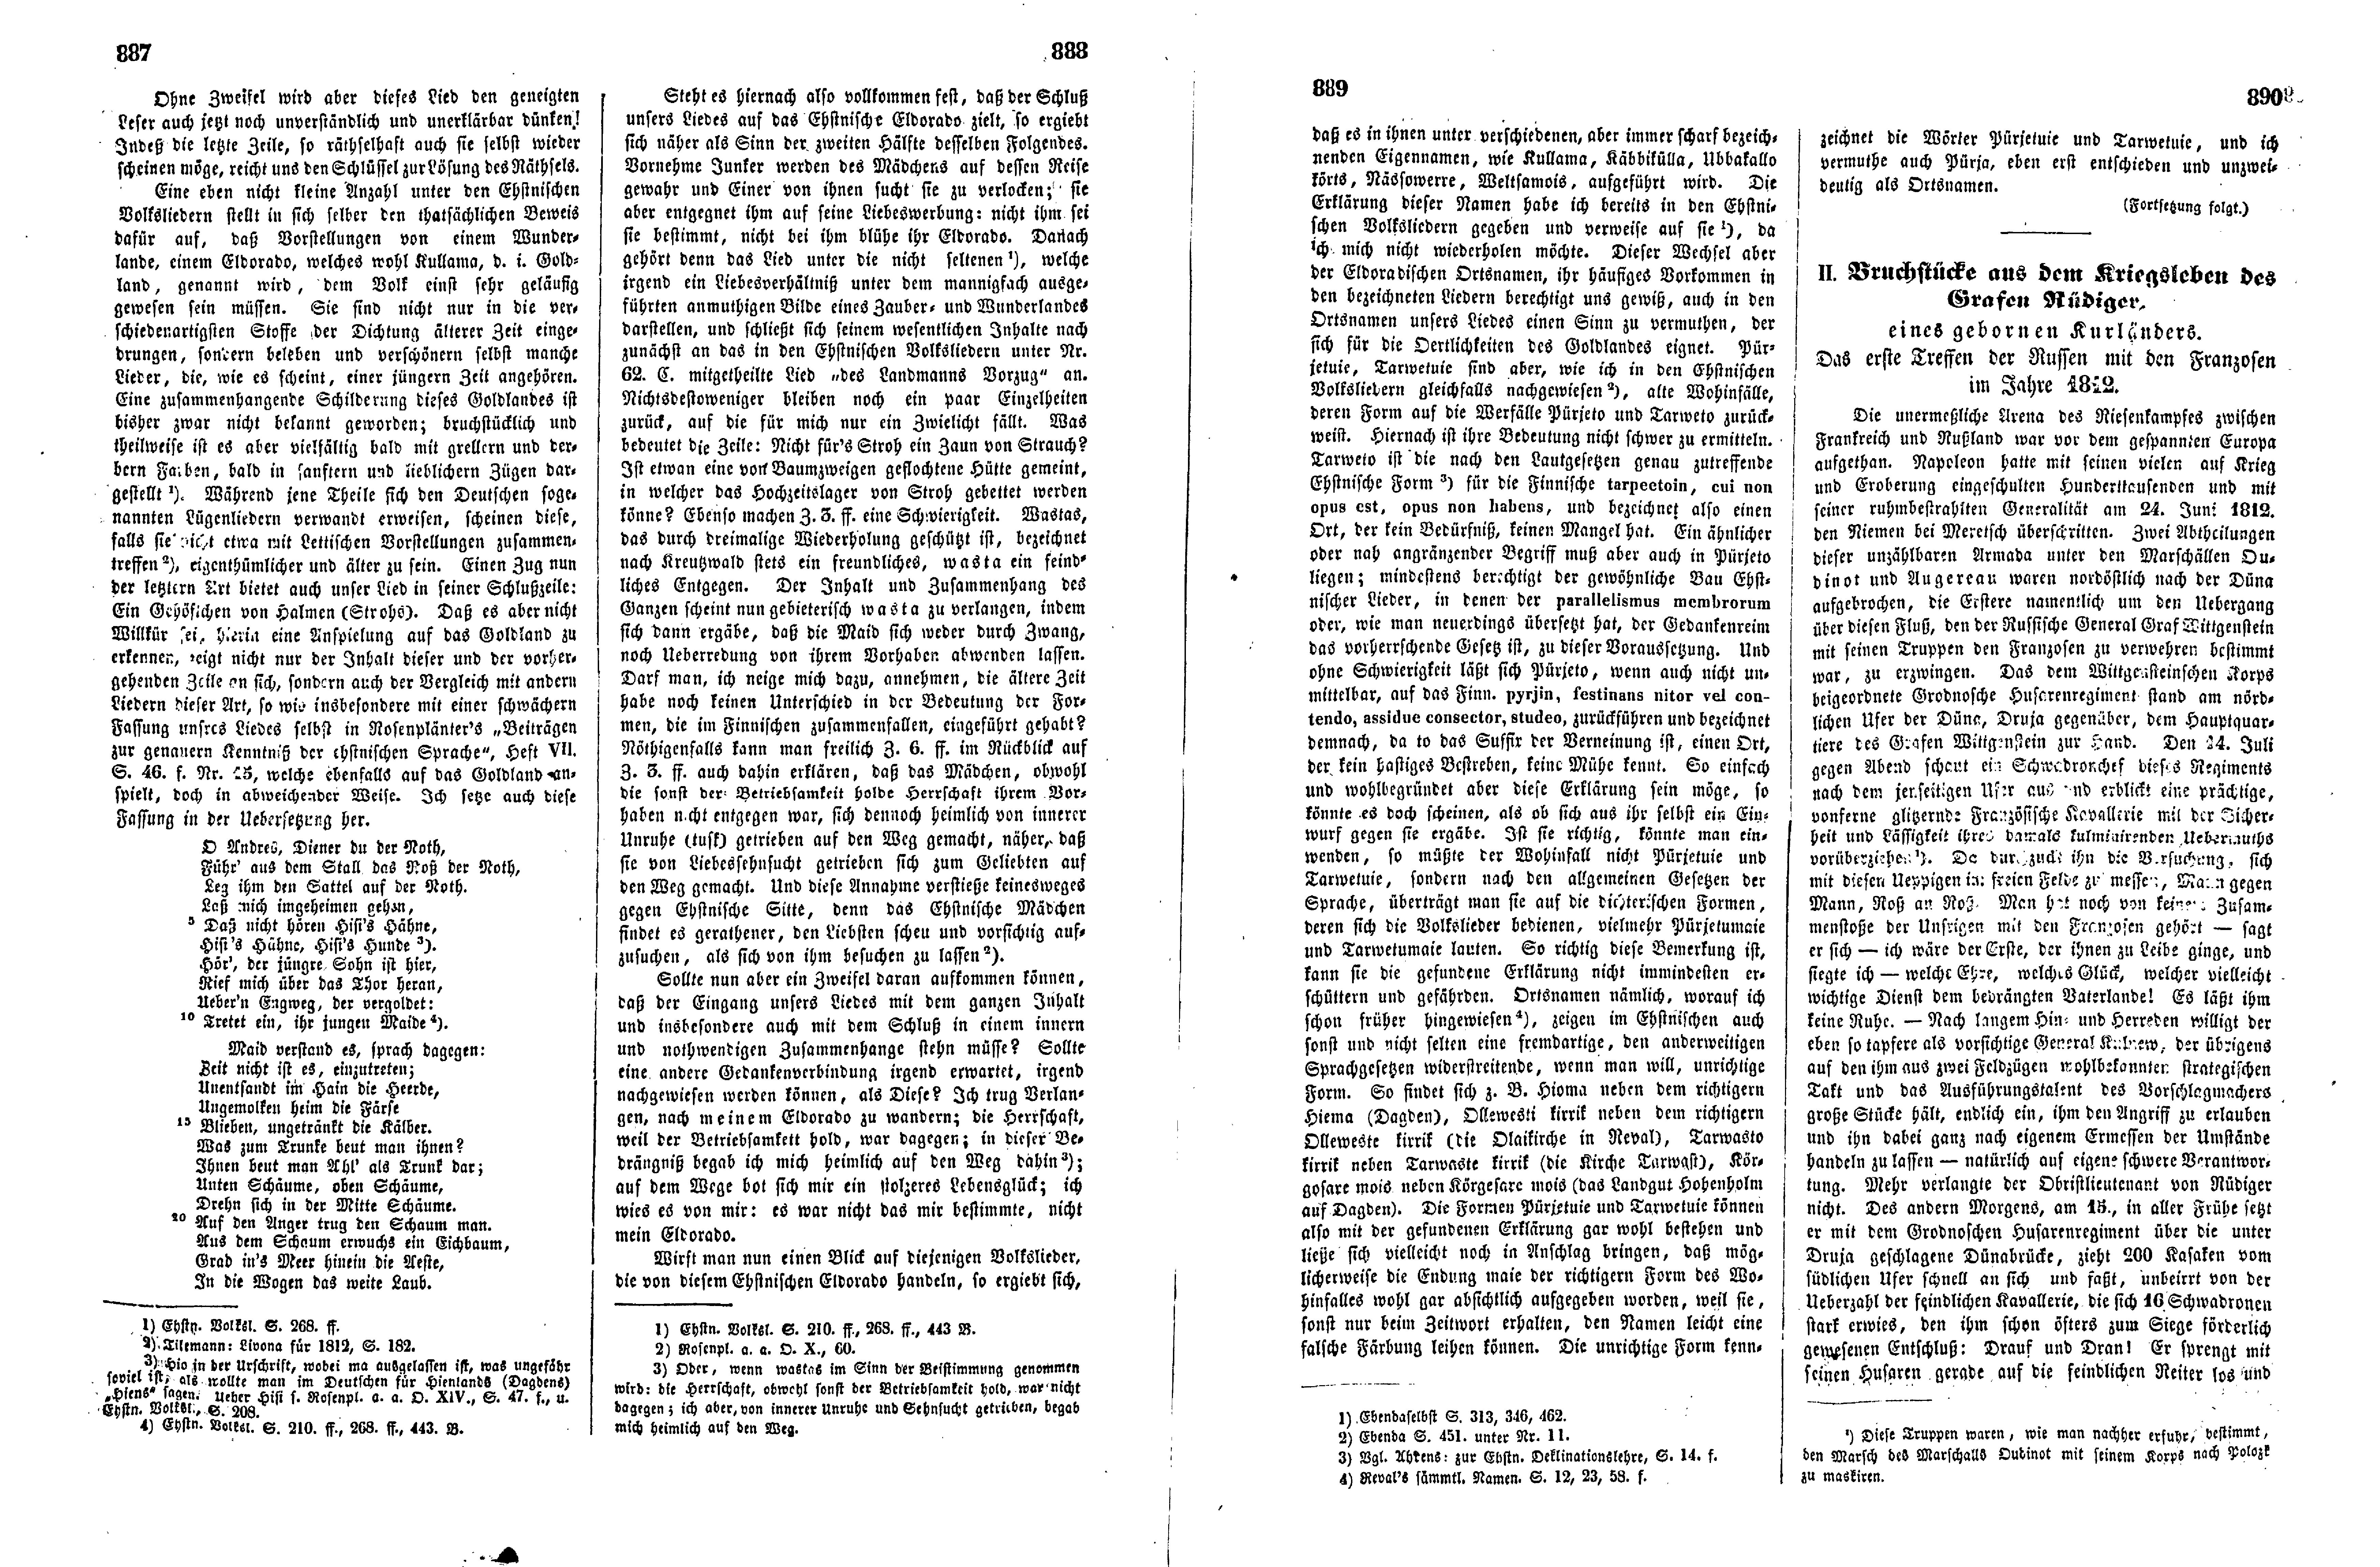 Das Inland [17] (1852) | 227. (887-890) Main body of text